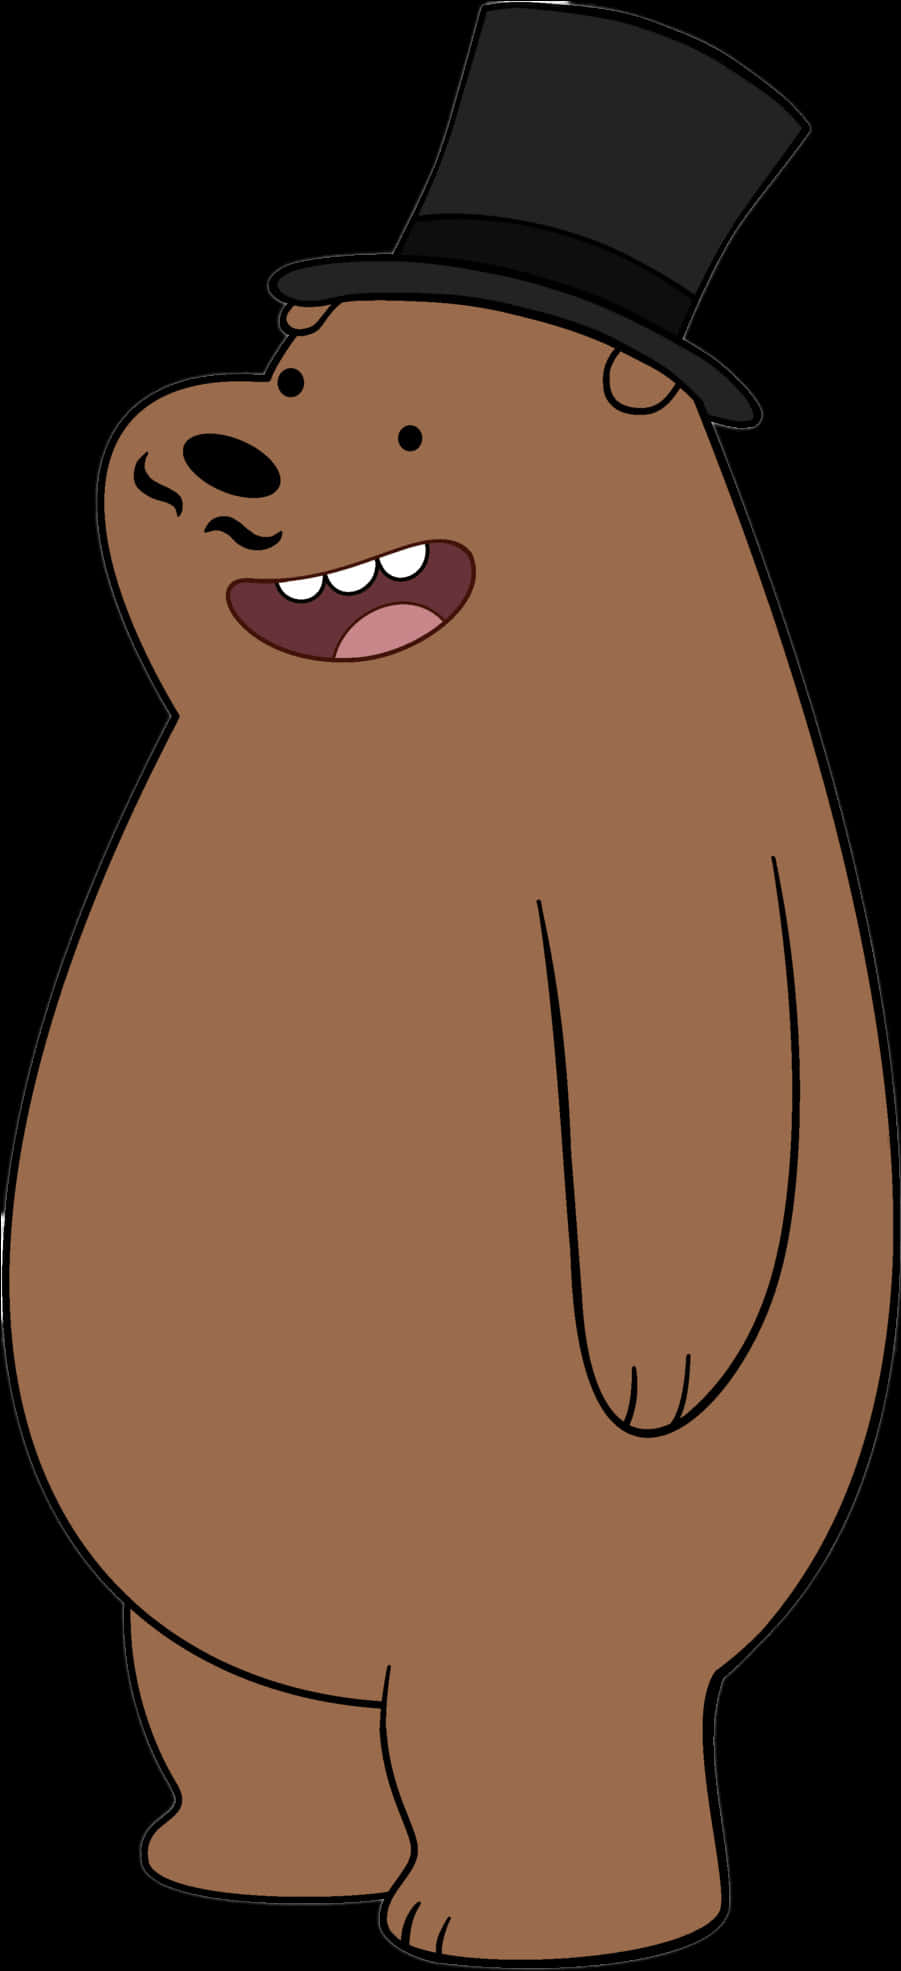 A Cartoon Of A Brown Animal